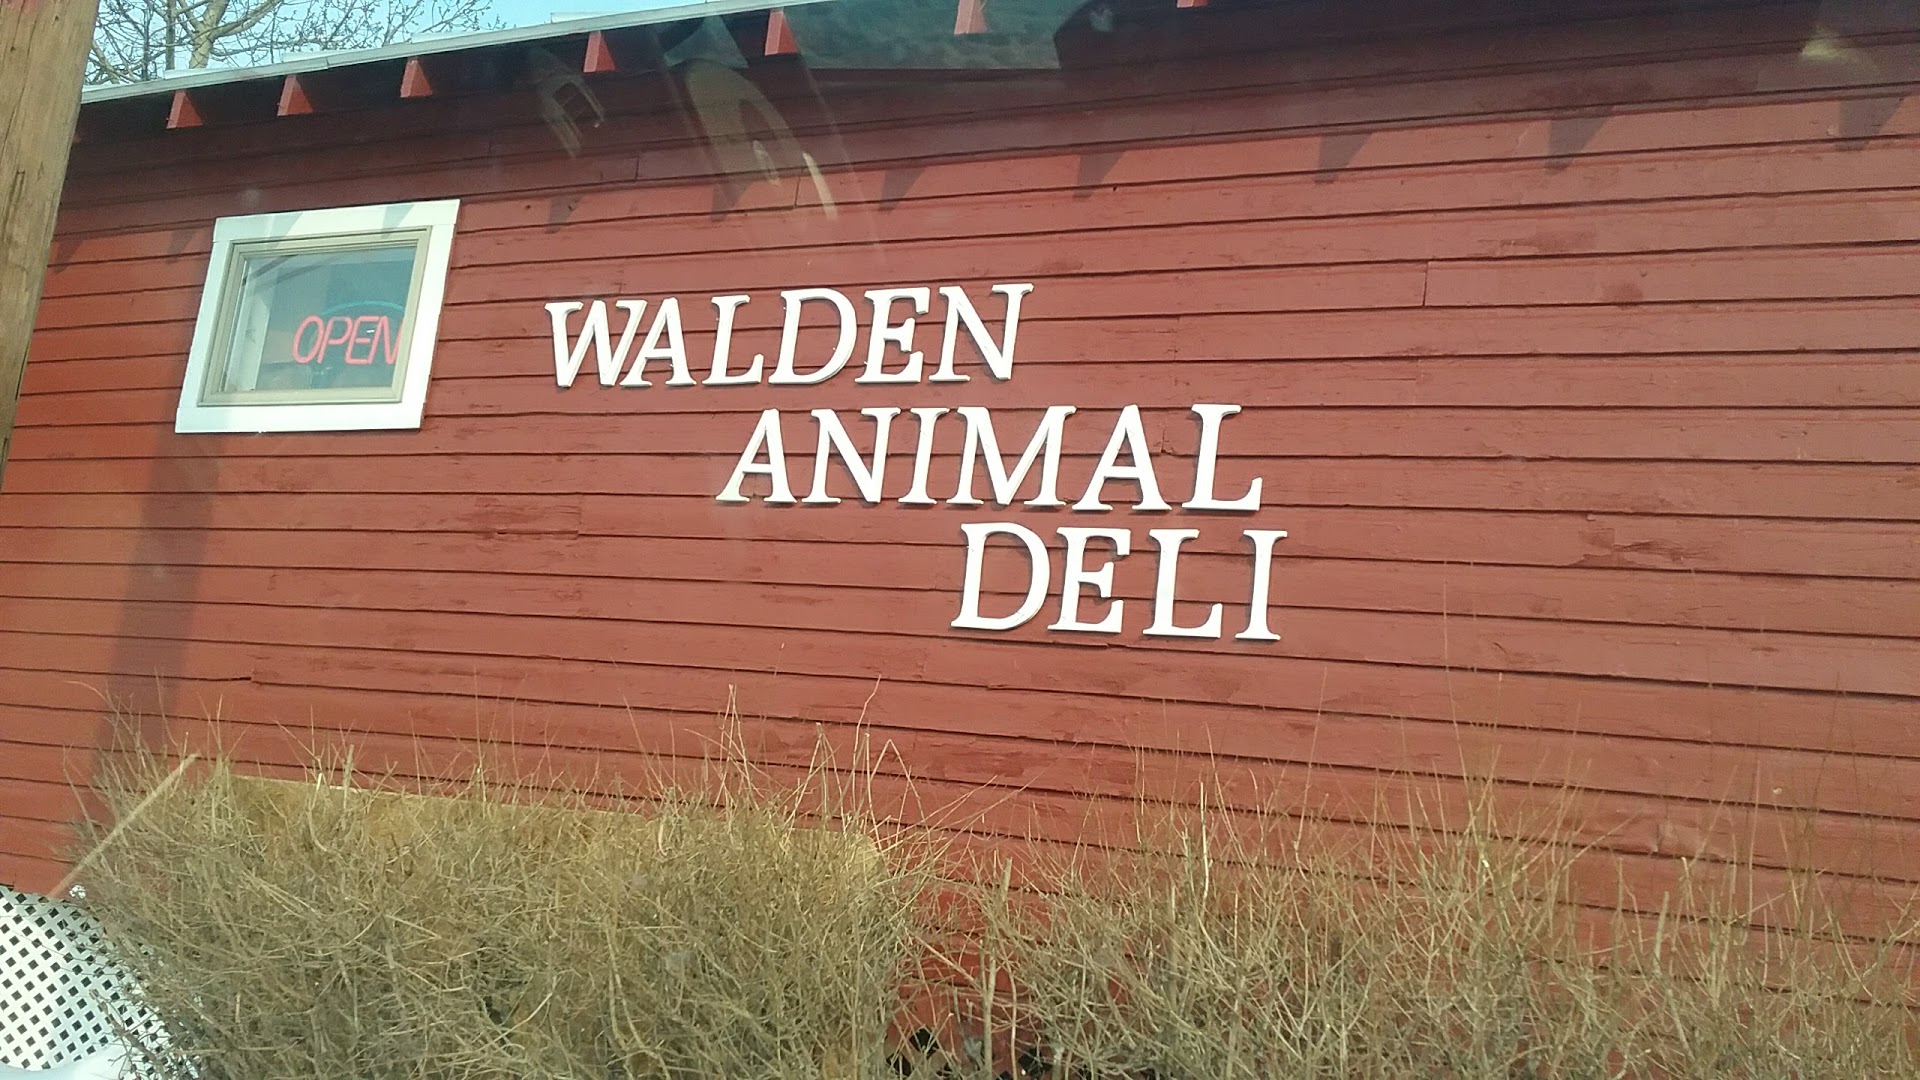 Walden Animal Deli